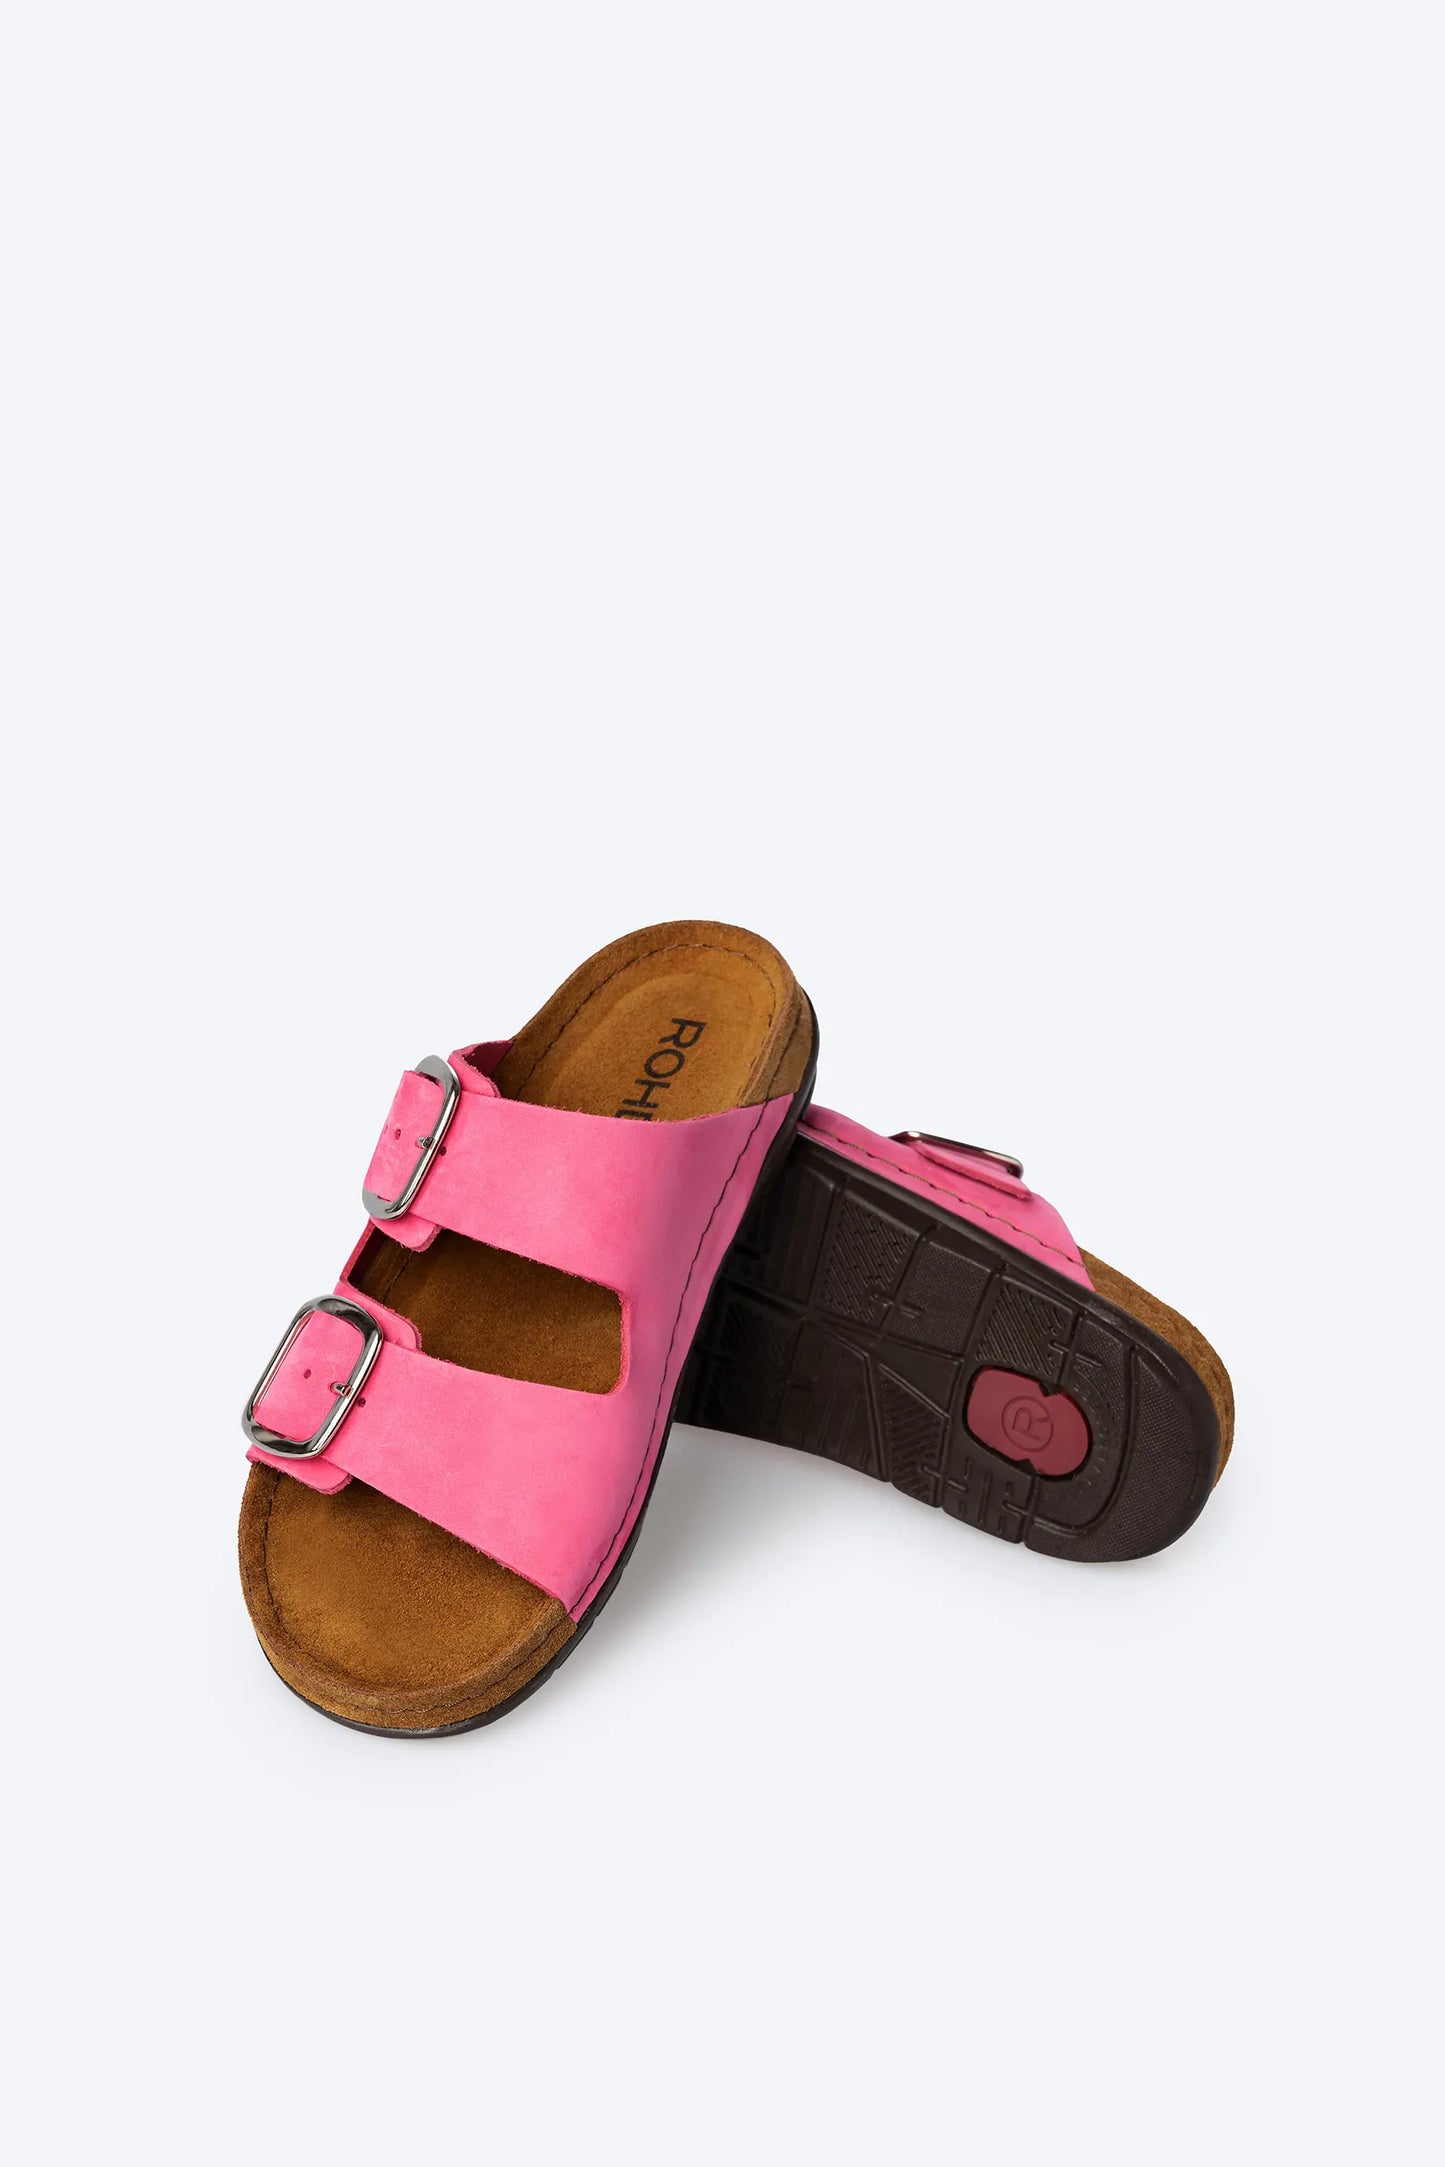 Rohde 5879 46 Rodigo-D Pink 2 Strap Sandals